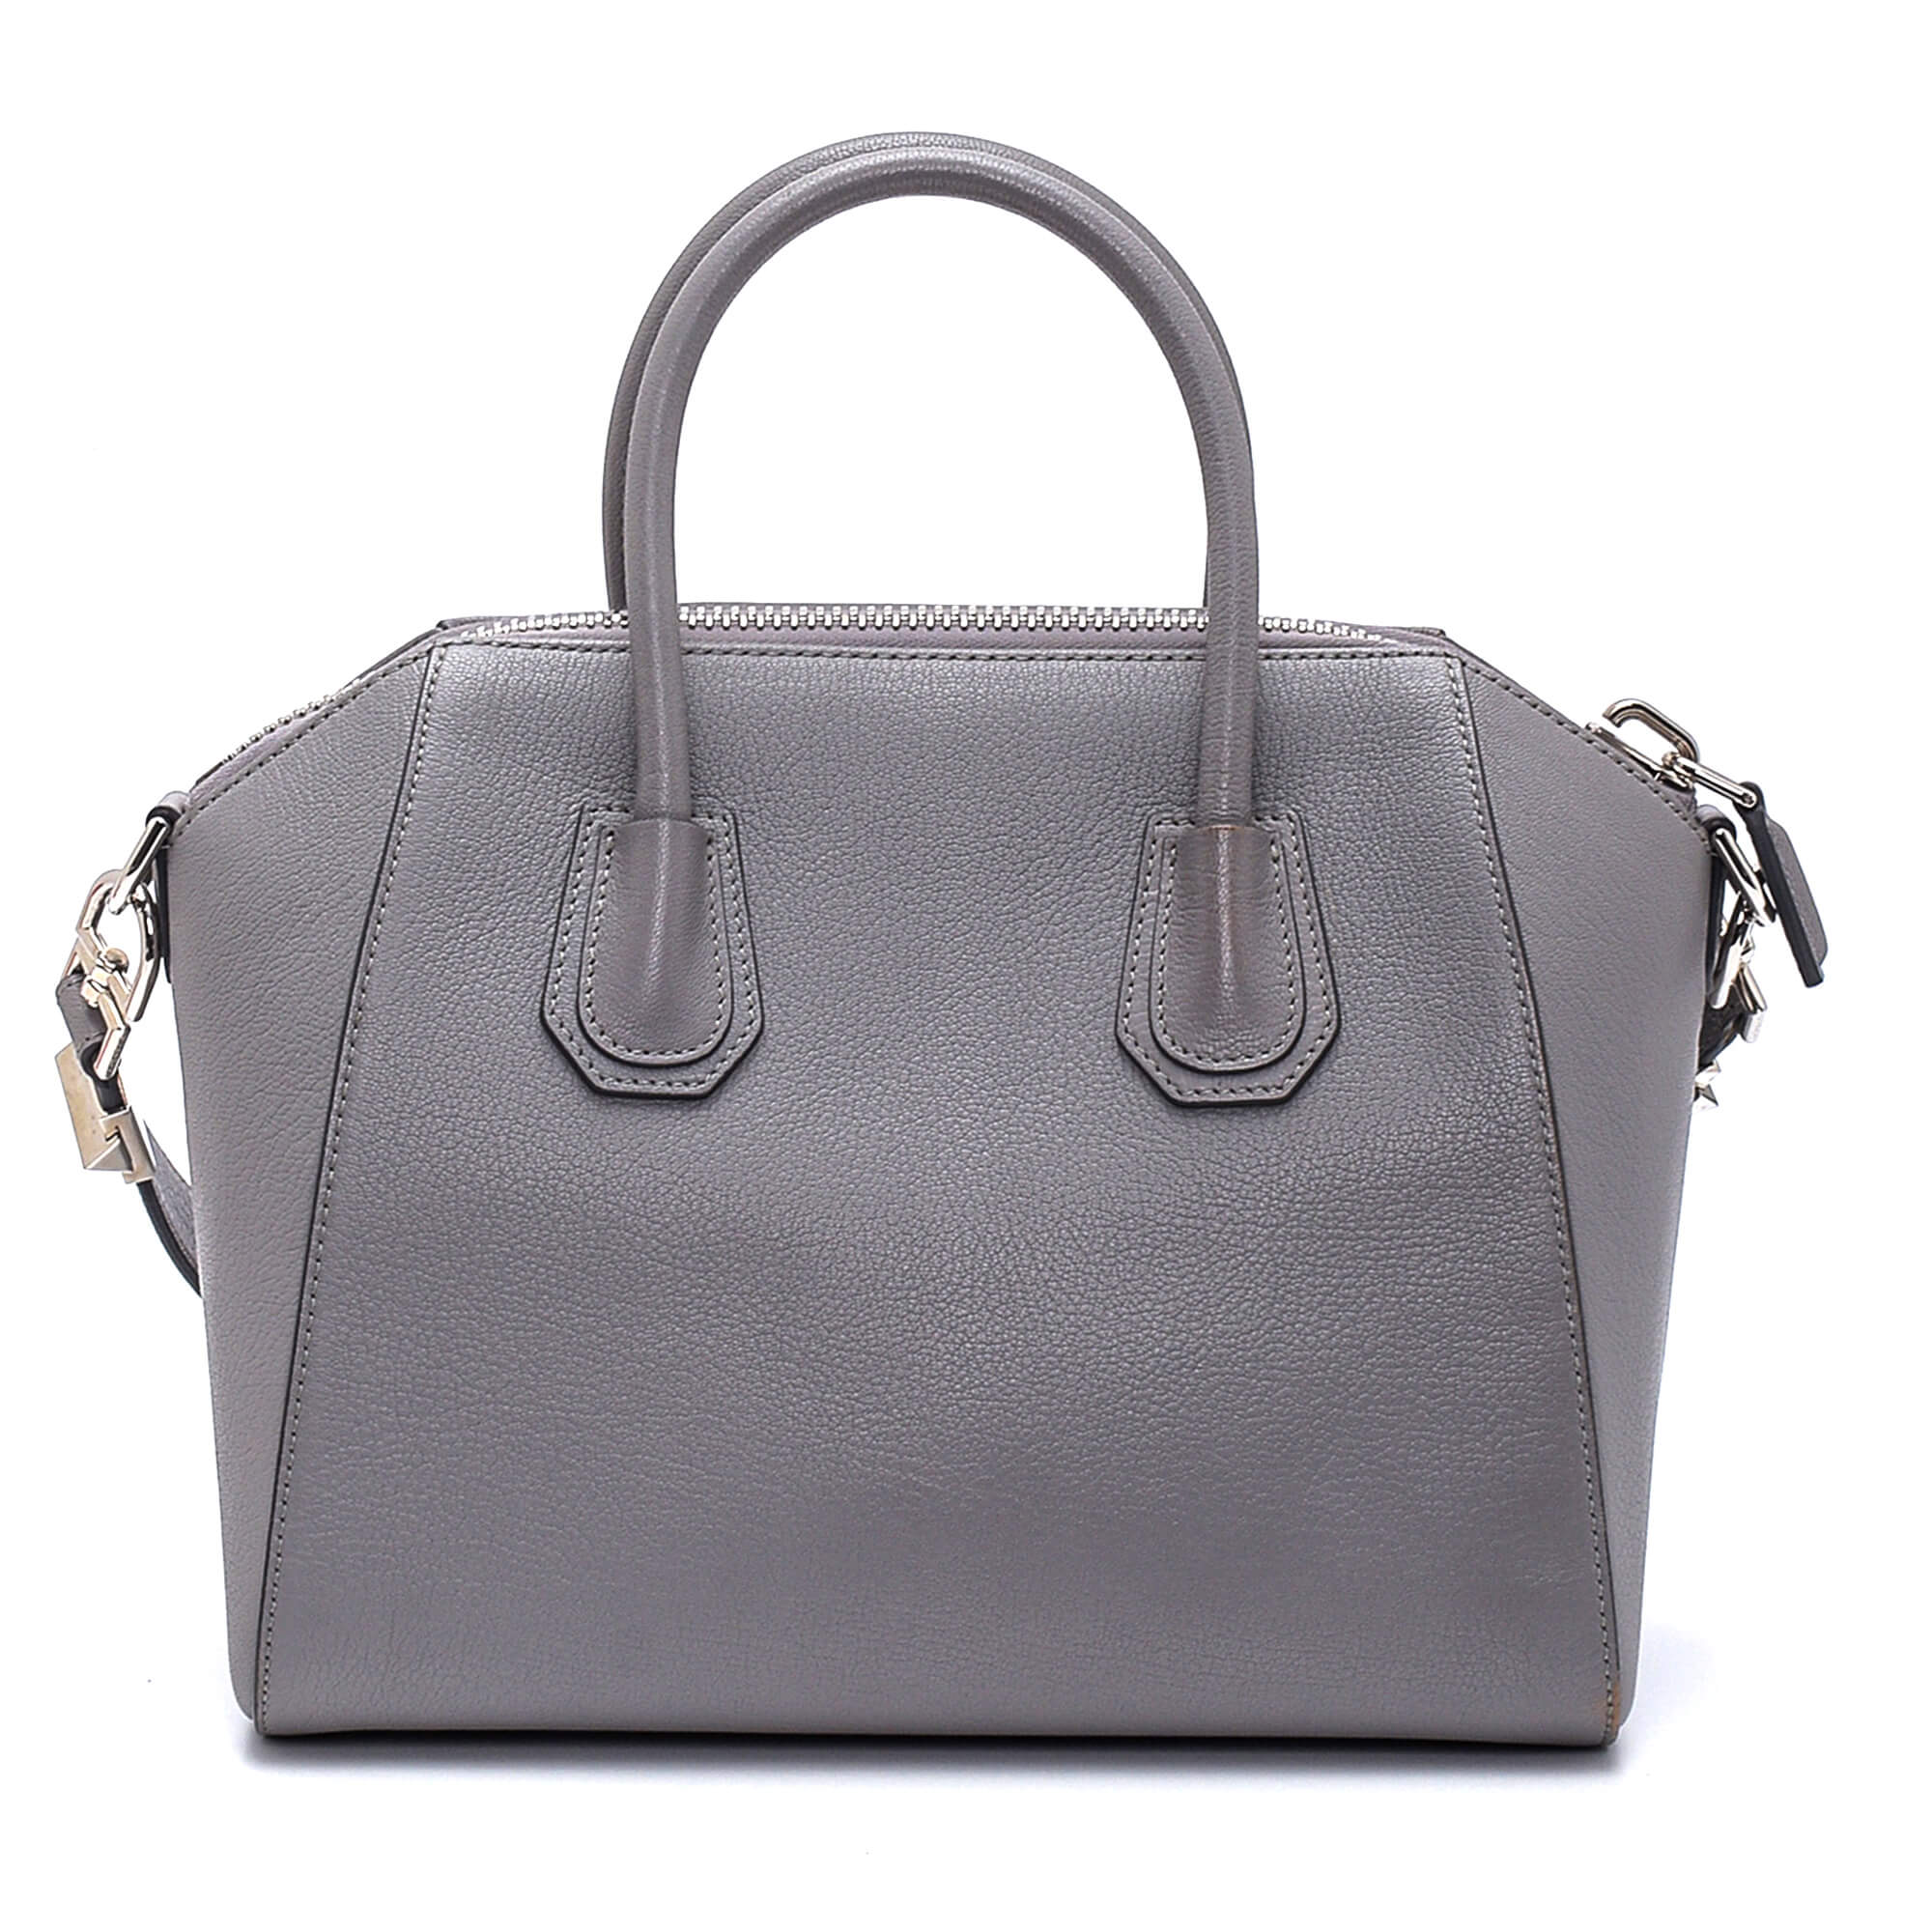 Givenchy - Grey Leather Antigona Small Bag